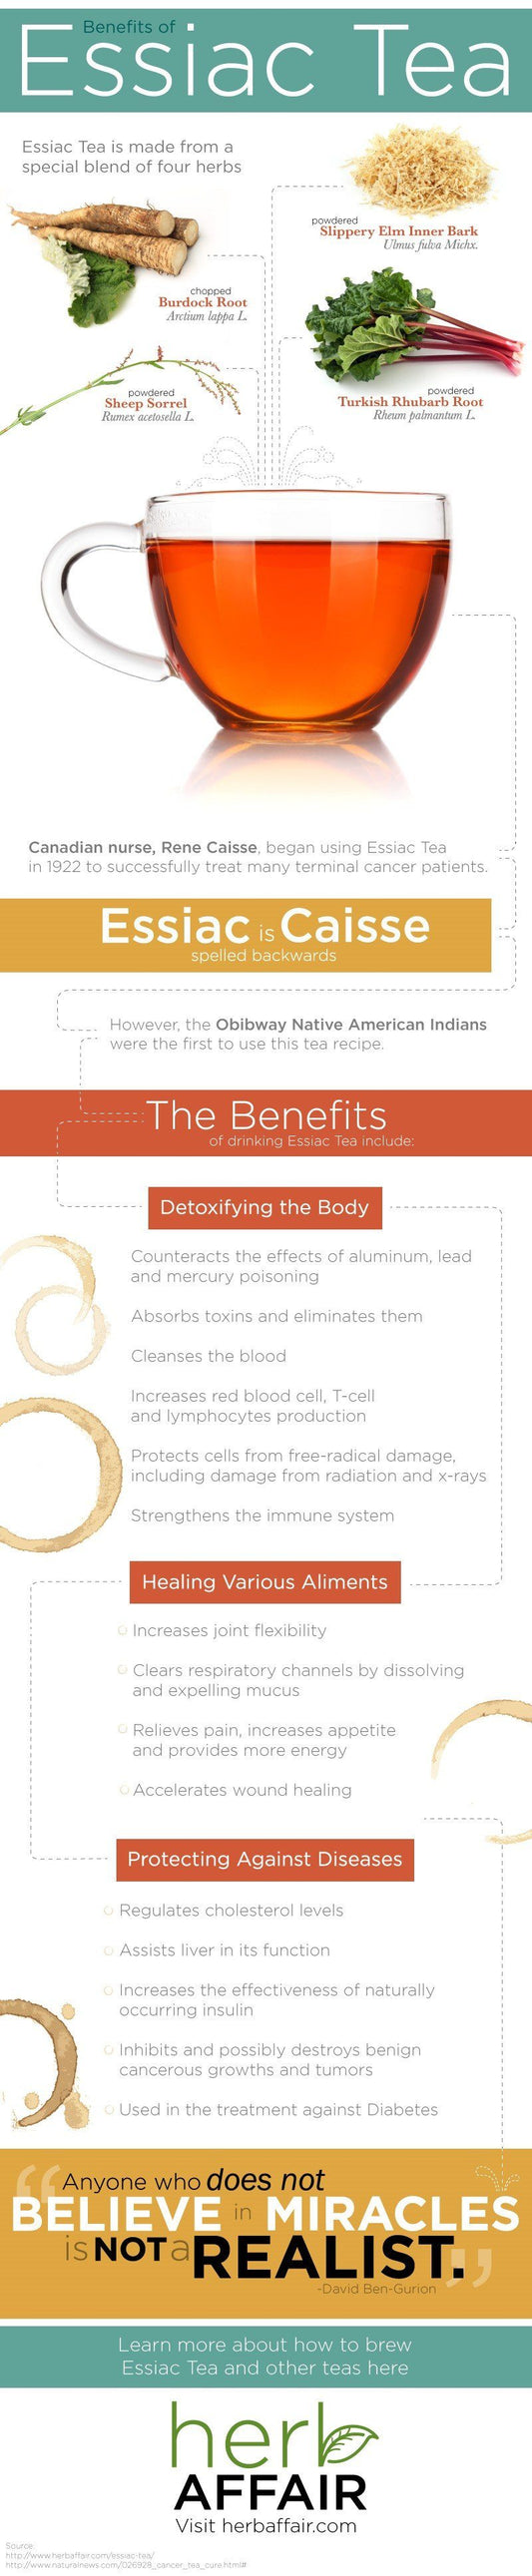 The Benefits of Essiac Tea (Infographic)